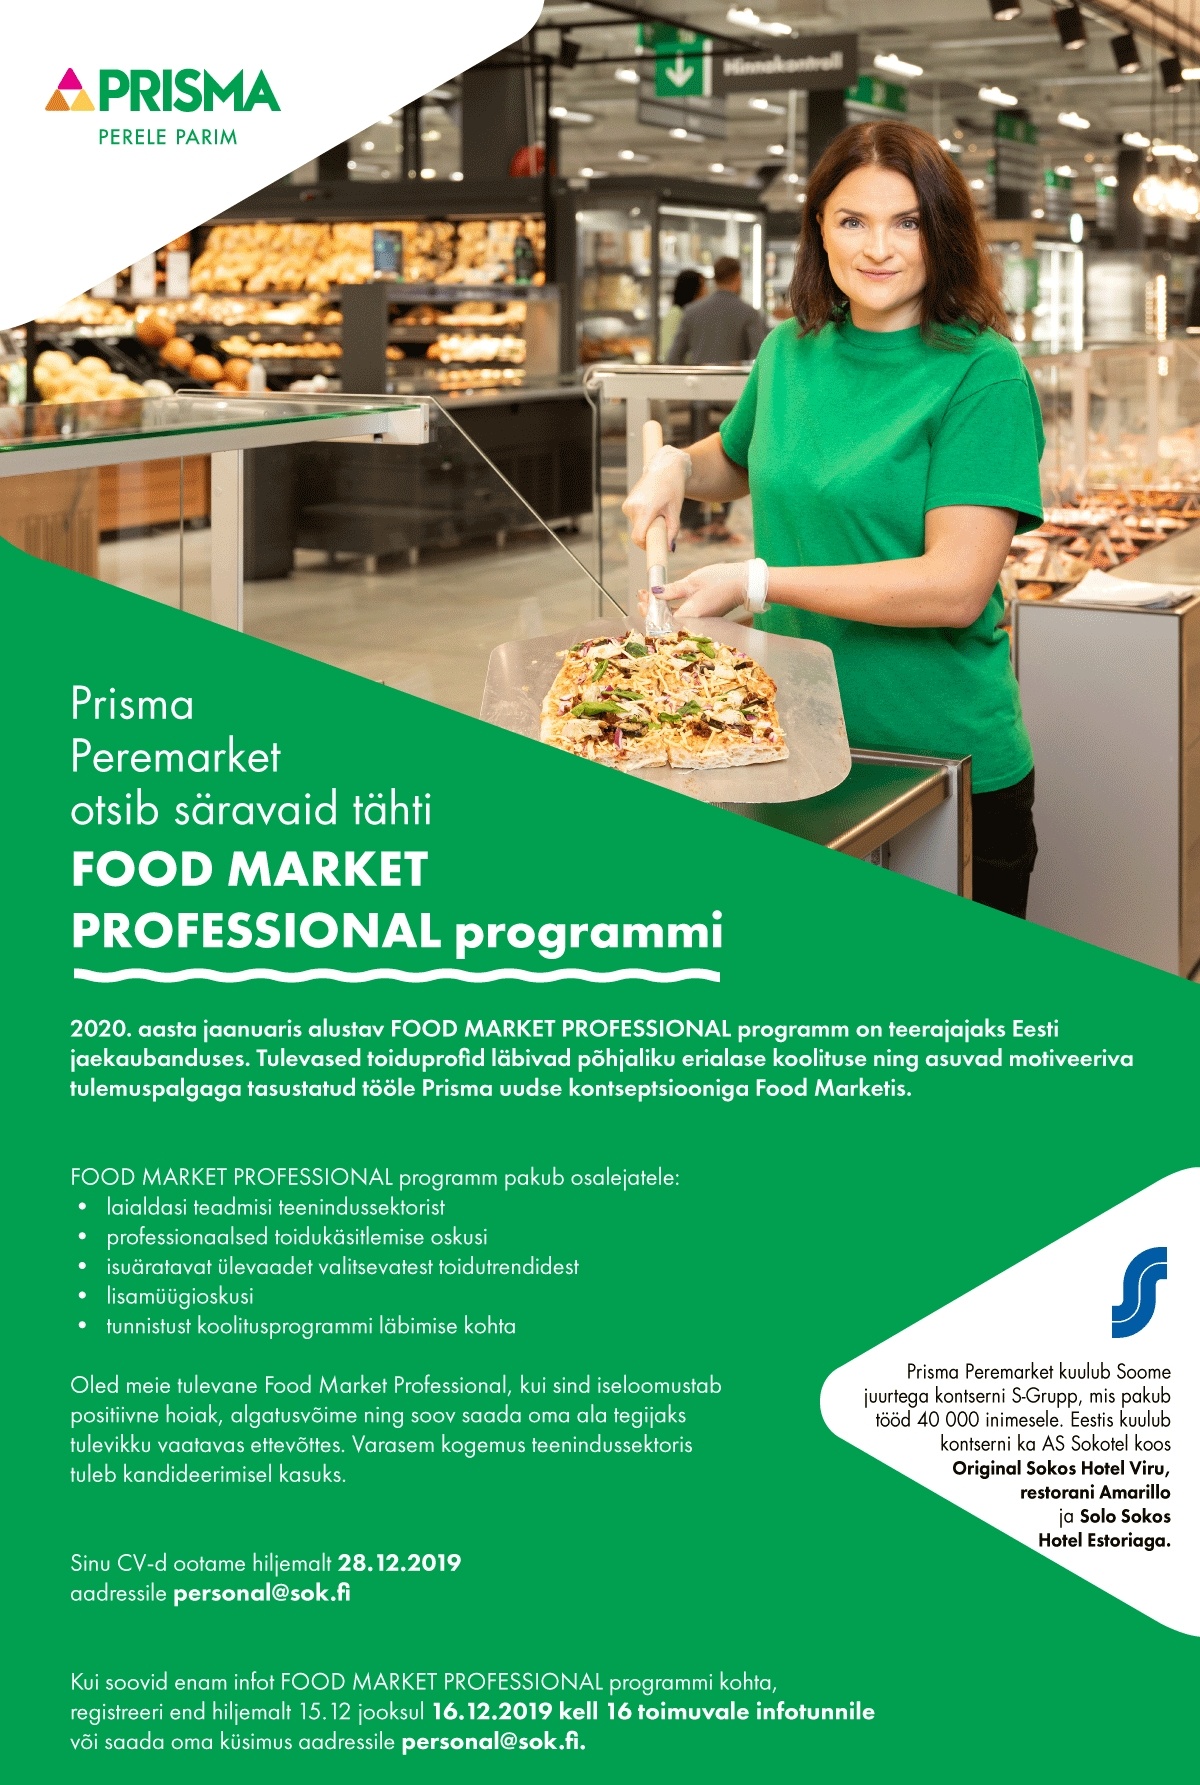 Prisma Peremarket AS FOOD MARKET PROFESSIONAL